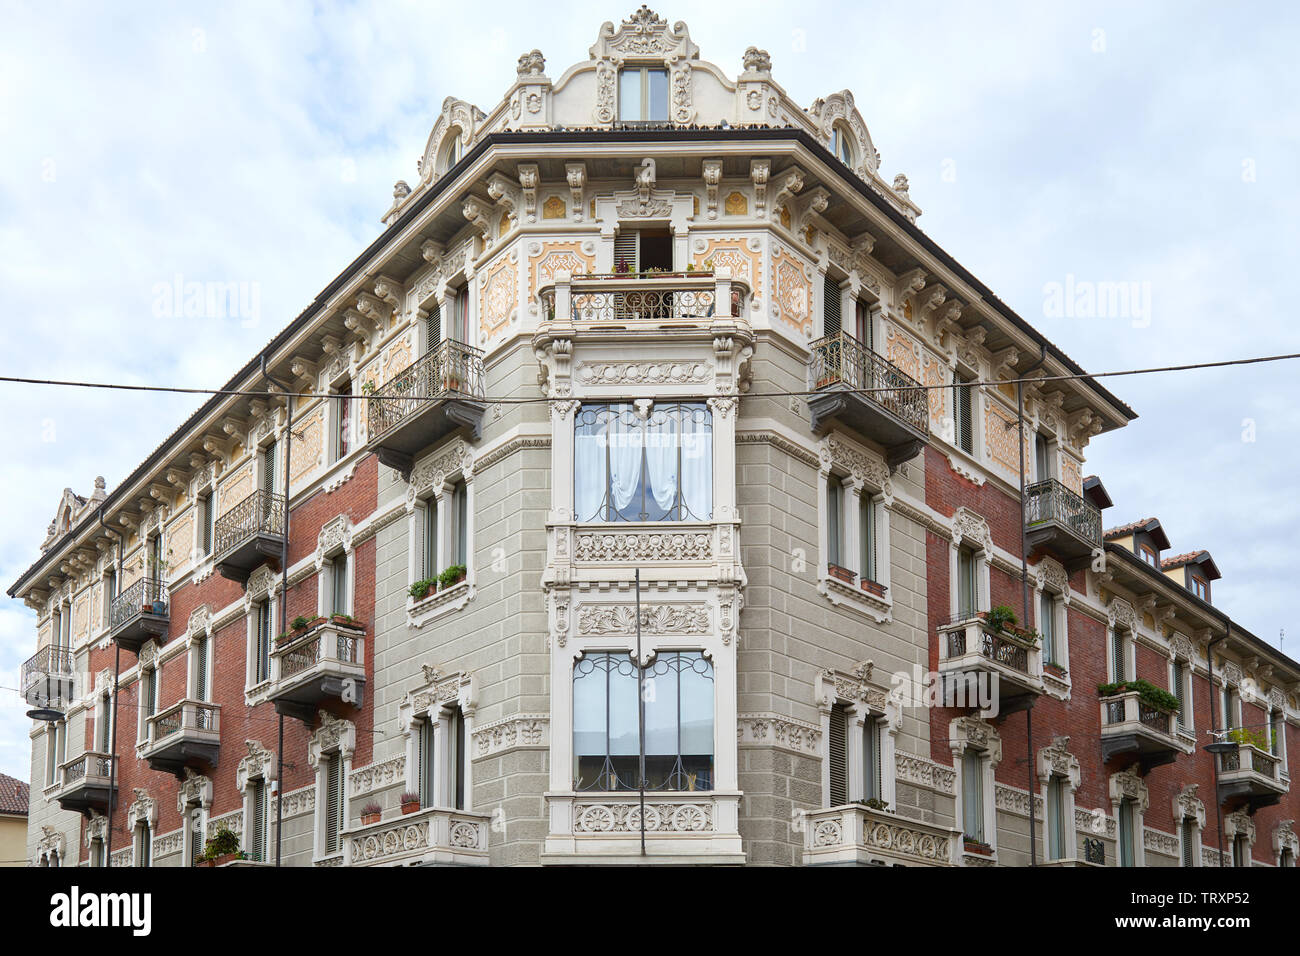 TURIN, Italien, 10. SEPTEMBER 2017: Art Nouveau Gebäude Architektur Fassade mit Blumenschmuck in Turin, Italien Stockfoto